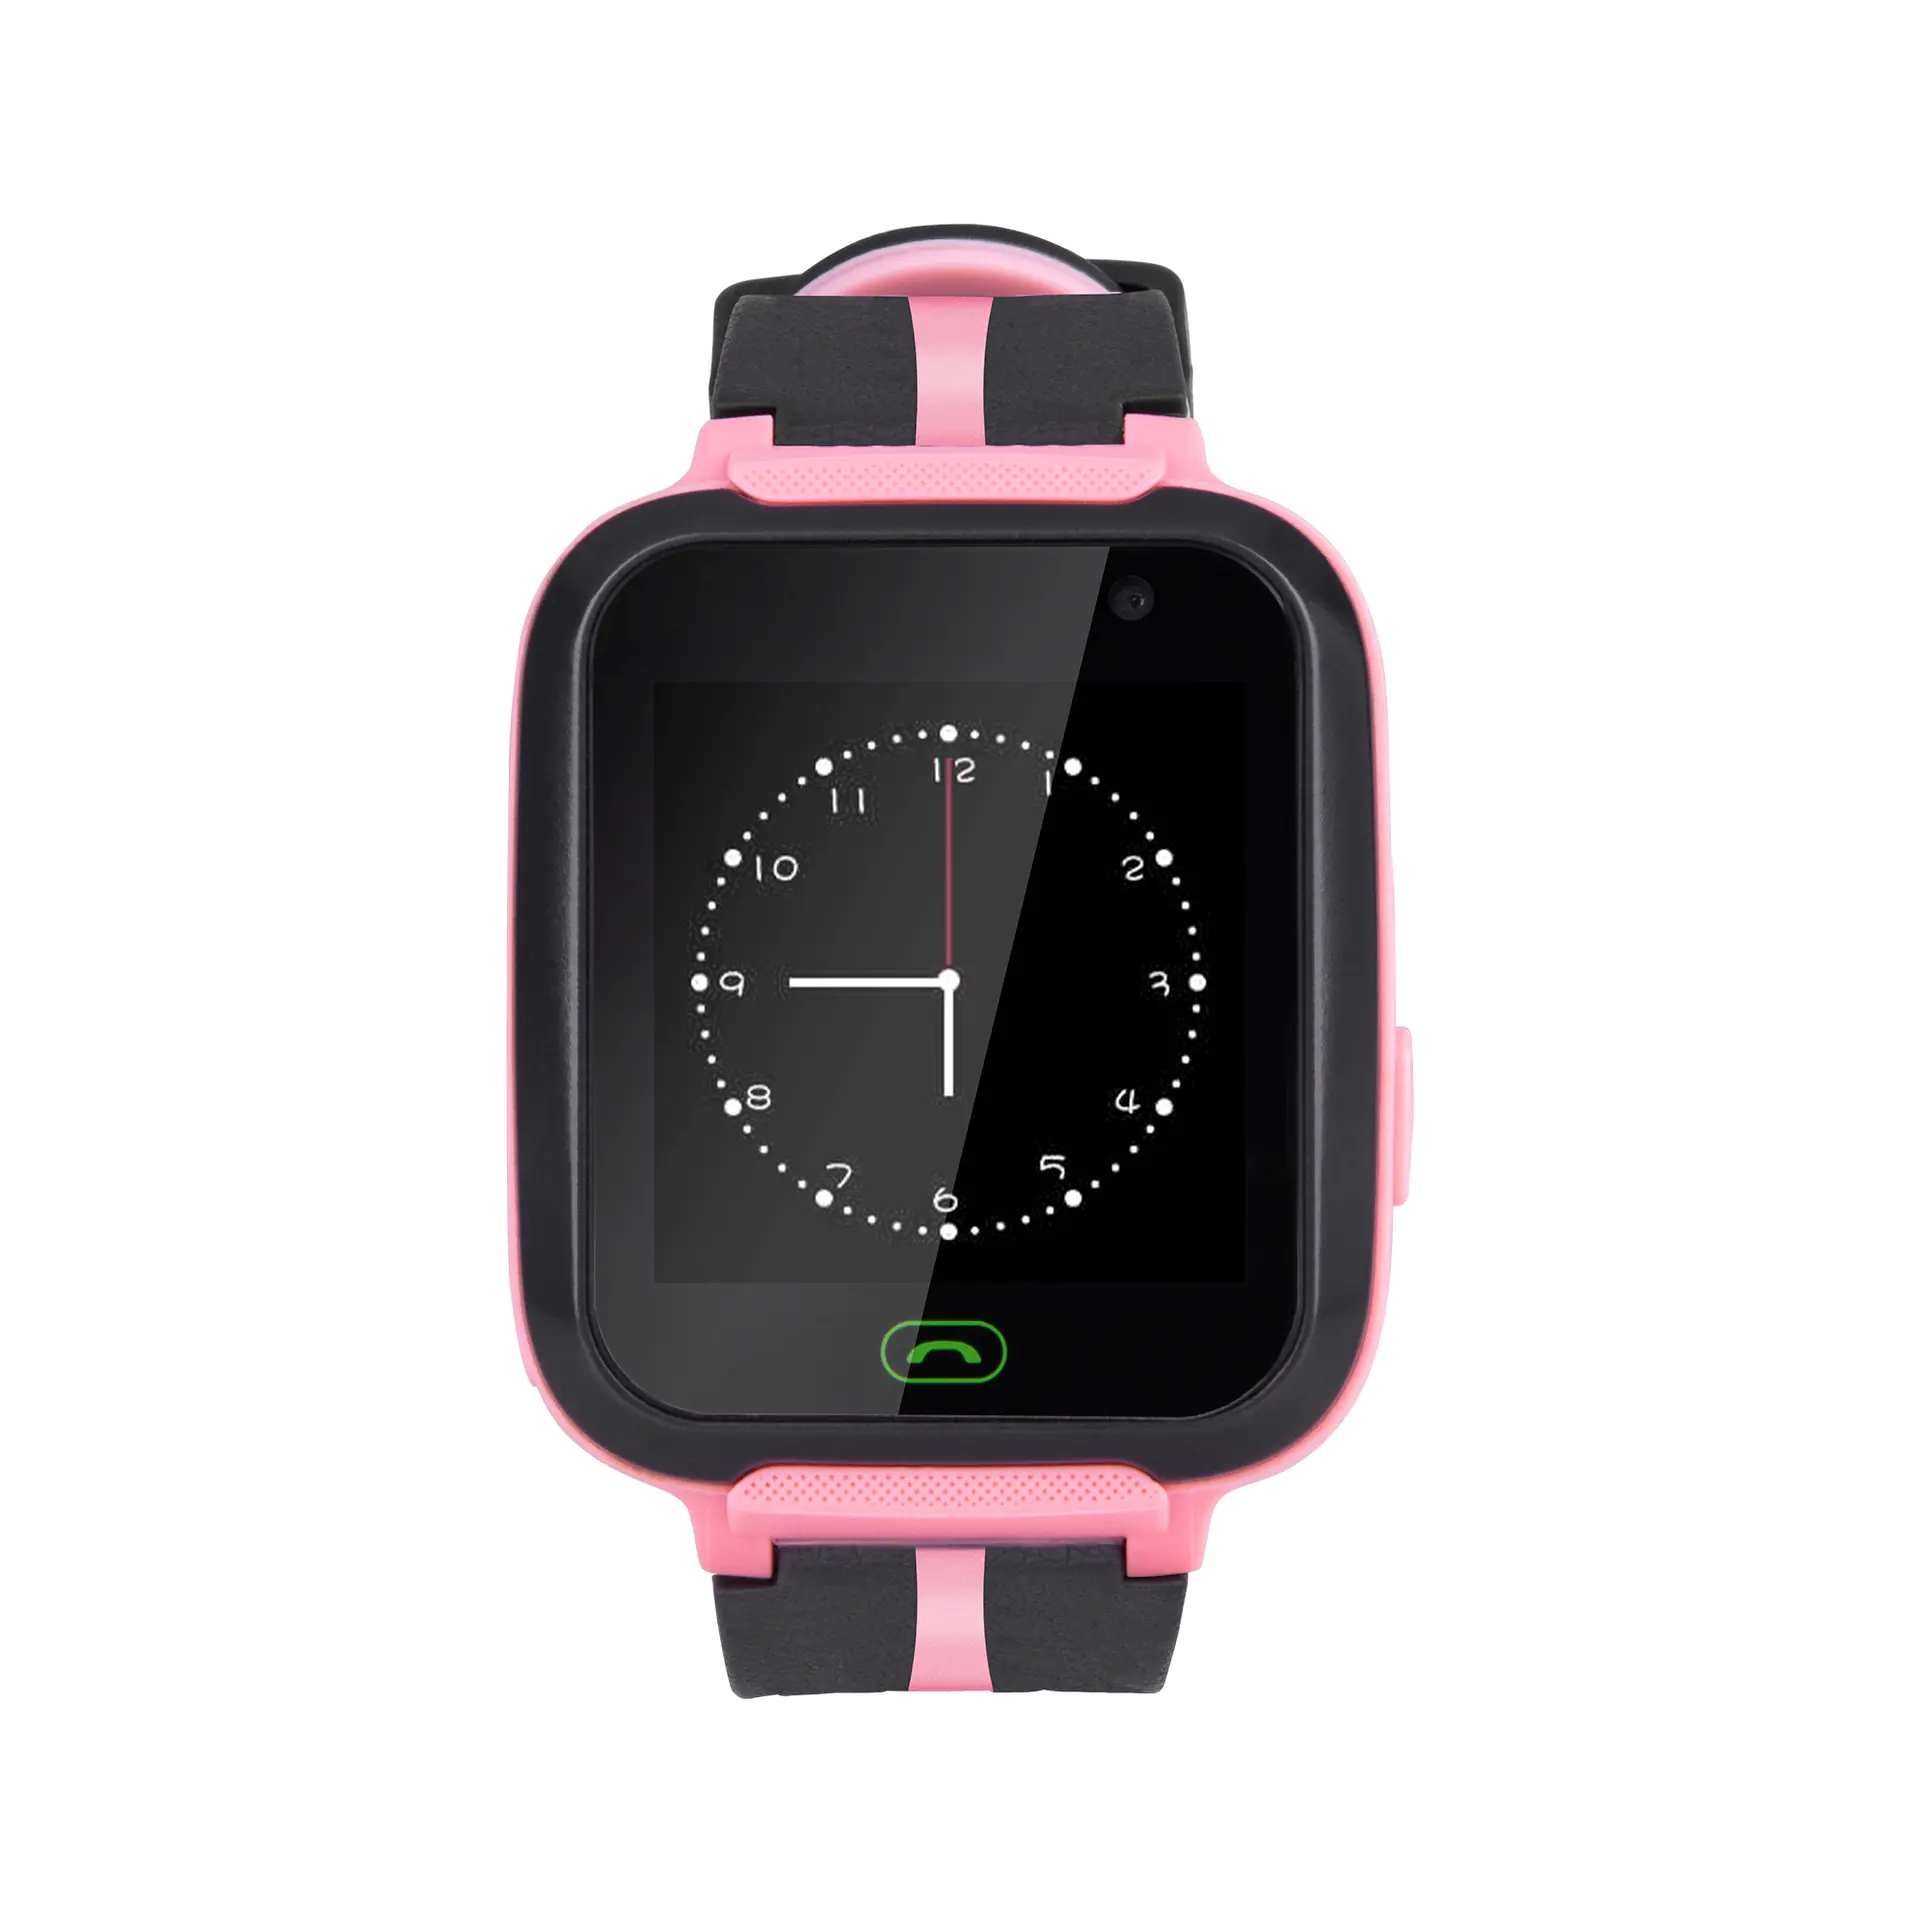 Детские часы Kruger & Matz smartkid розовый бренд Kruger & matz